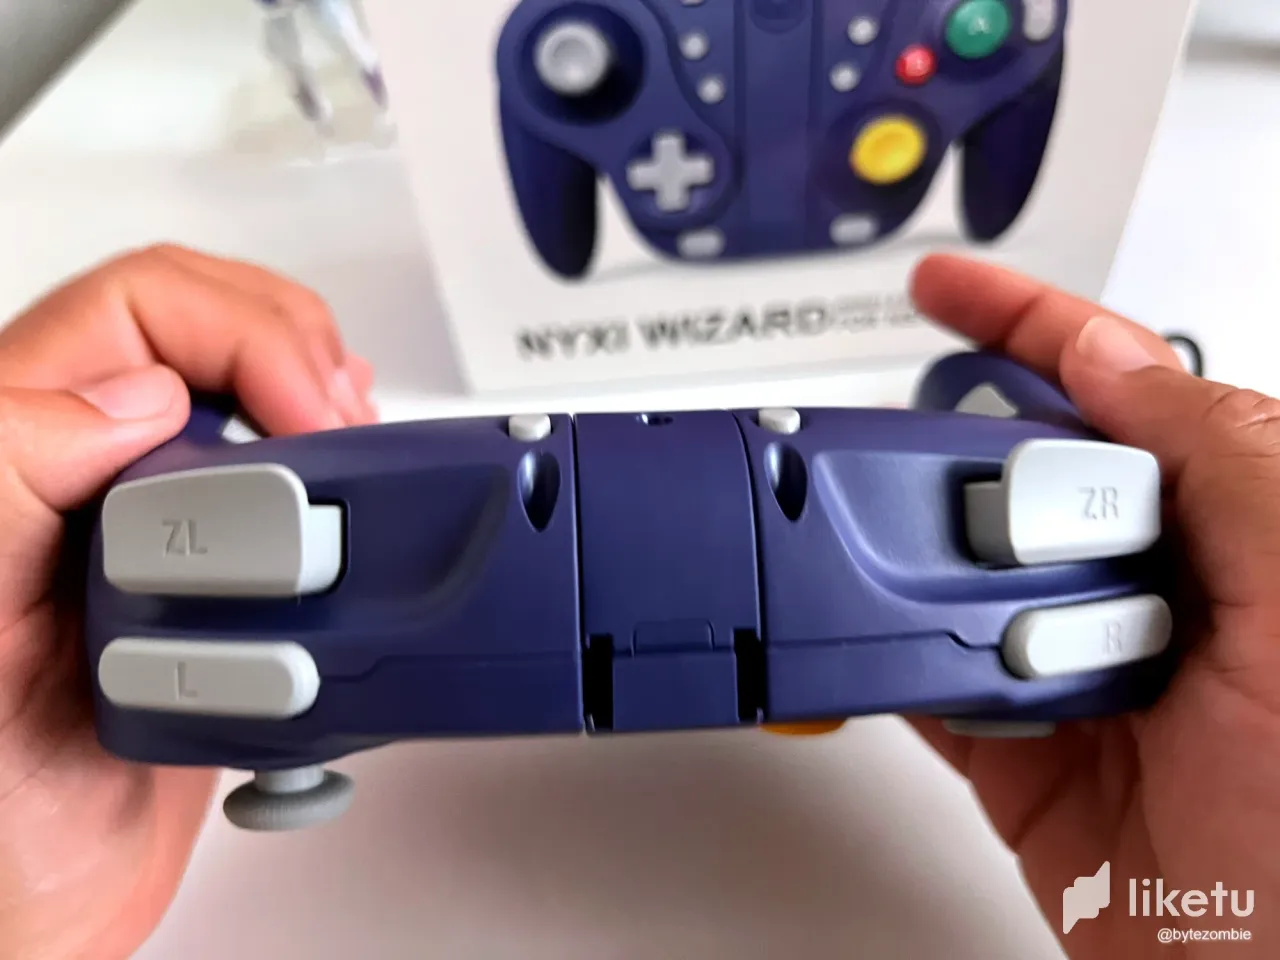 NYXI Wizard Wireless Joy-Pads – Awesome Hall Effect GameCube Joy-Cons